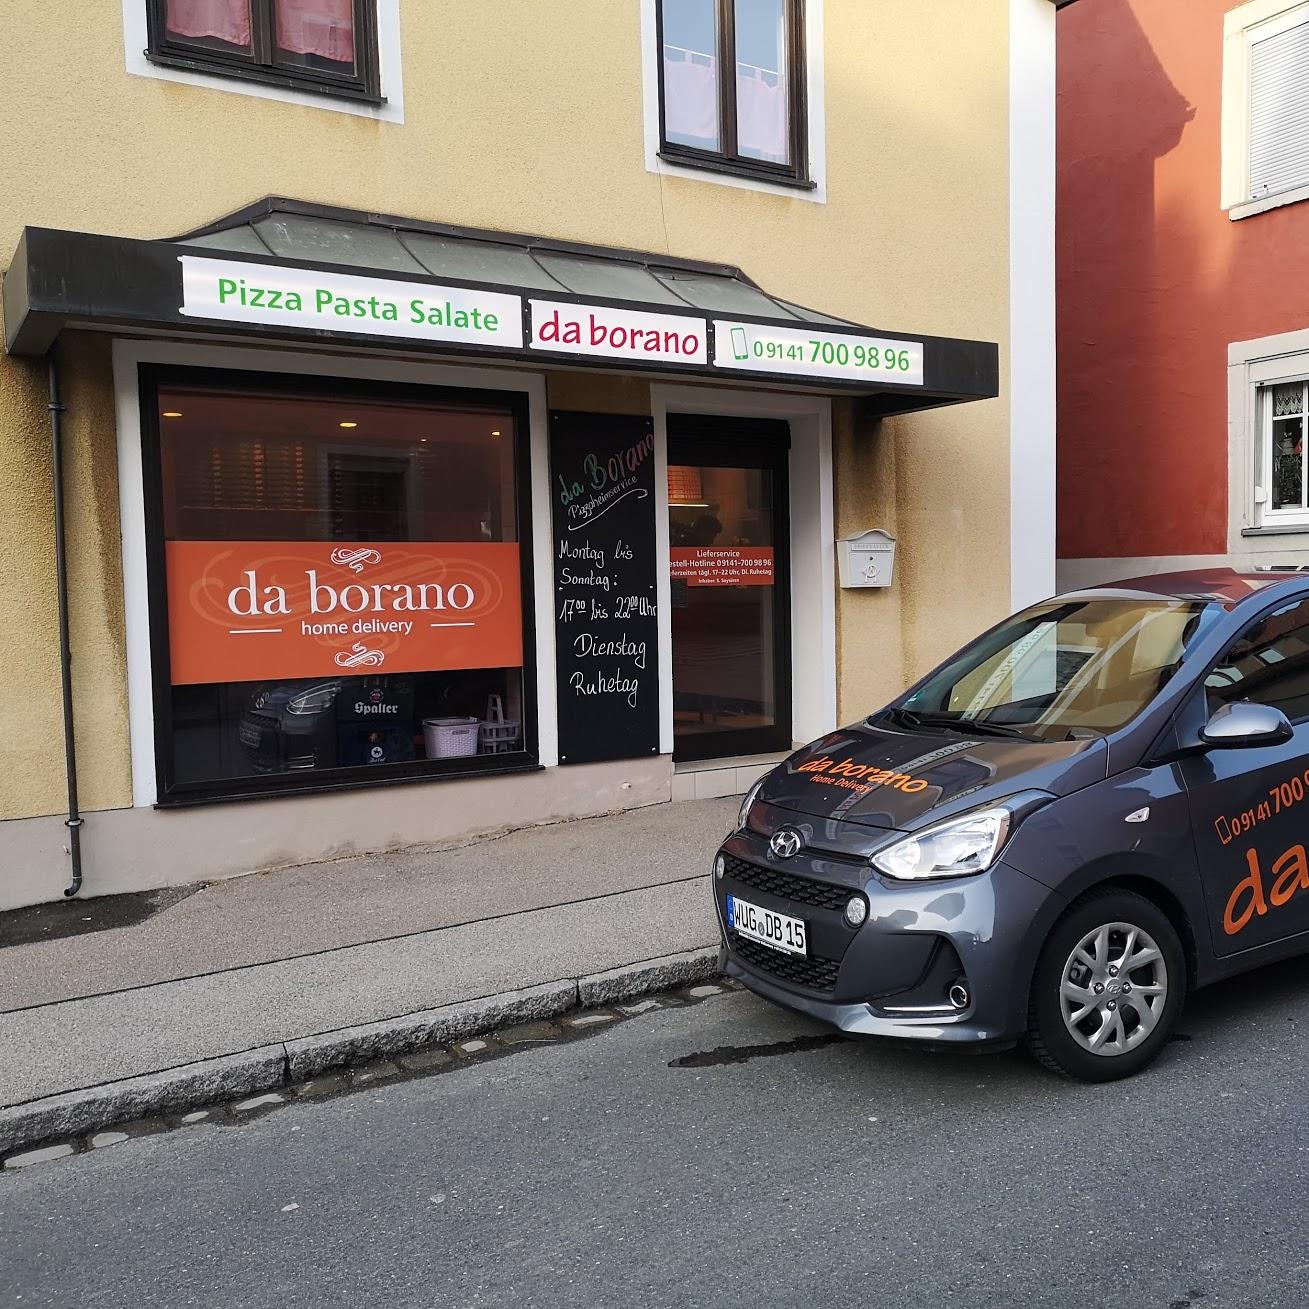 Restaurant "da borano Lieferservice" in Ellingen